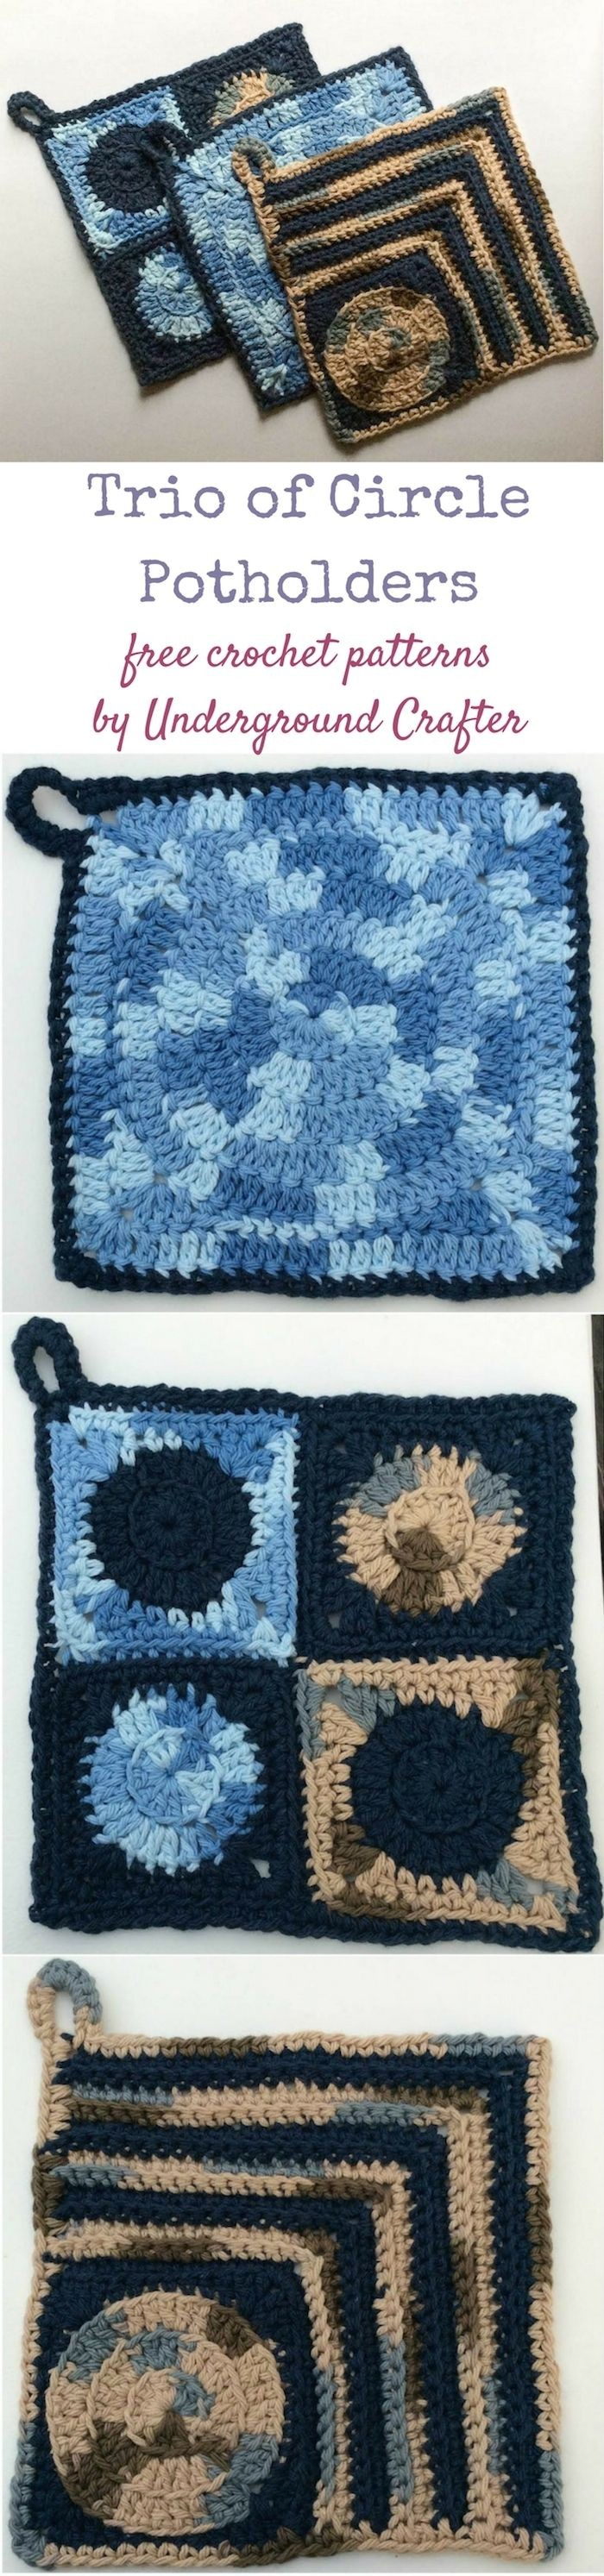 Double Thick Diagonal Crochet Potholder Pattern Crochet Pattern For Potholders Inspirational Ravelry Double Thick